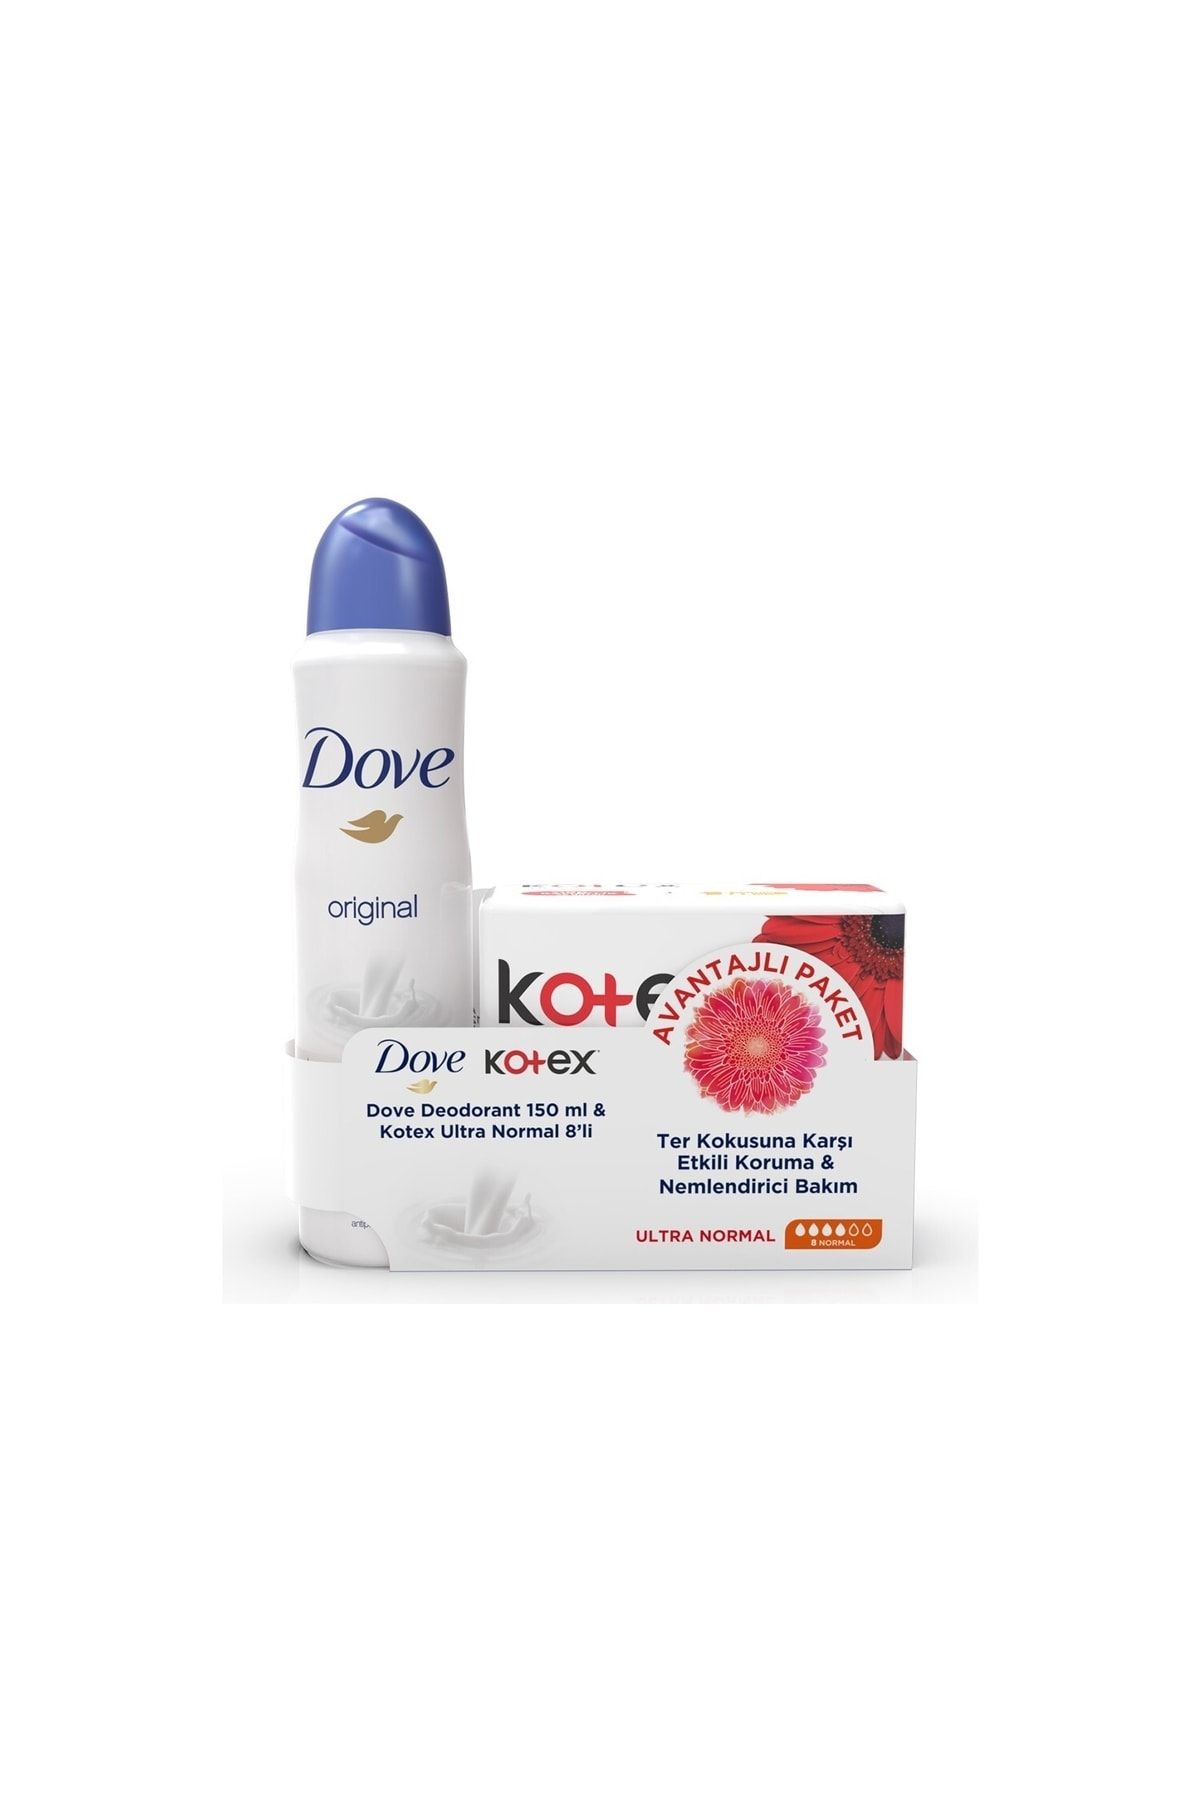 Dove Kadın Sprey Deodorant Original 150 Ml + Kotex Hijyenik Ped Ultra Normal 8'li